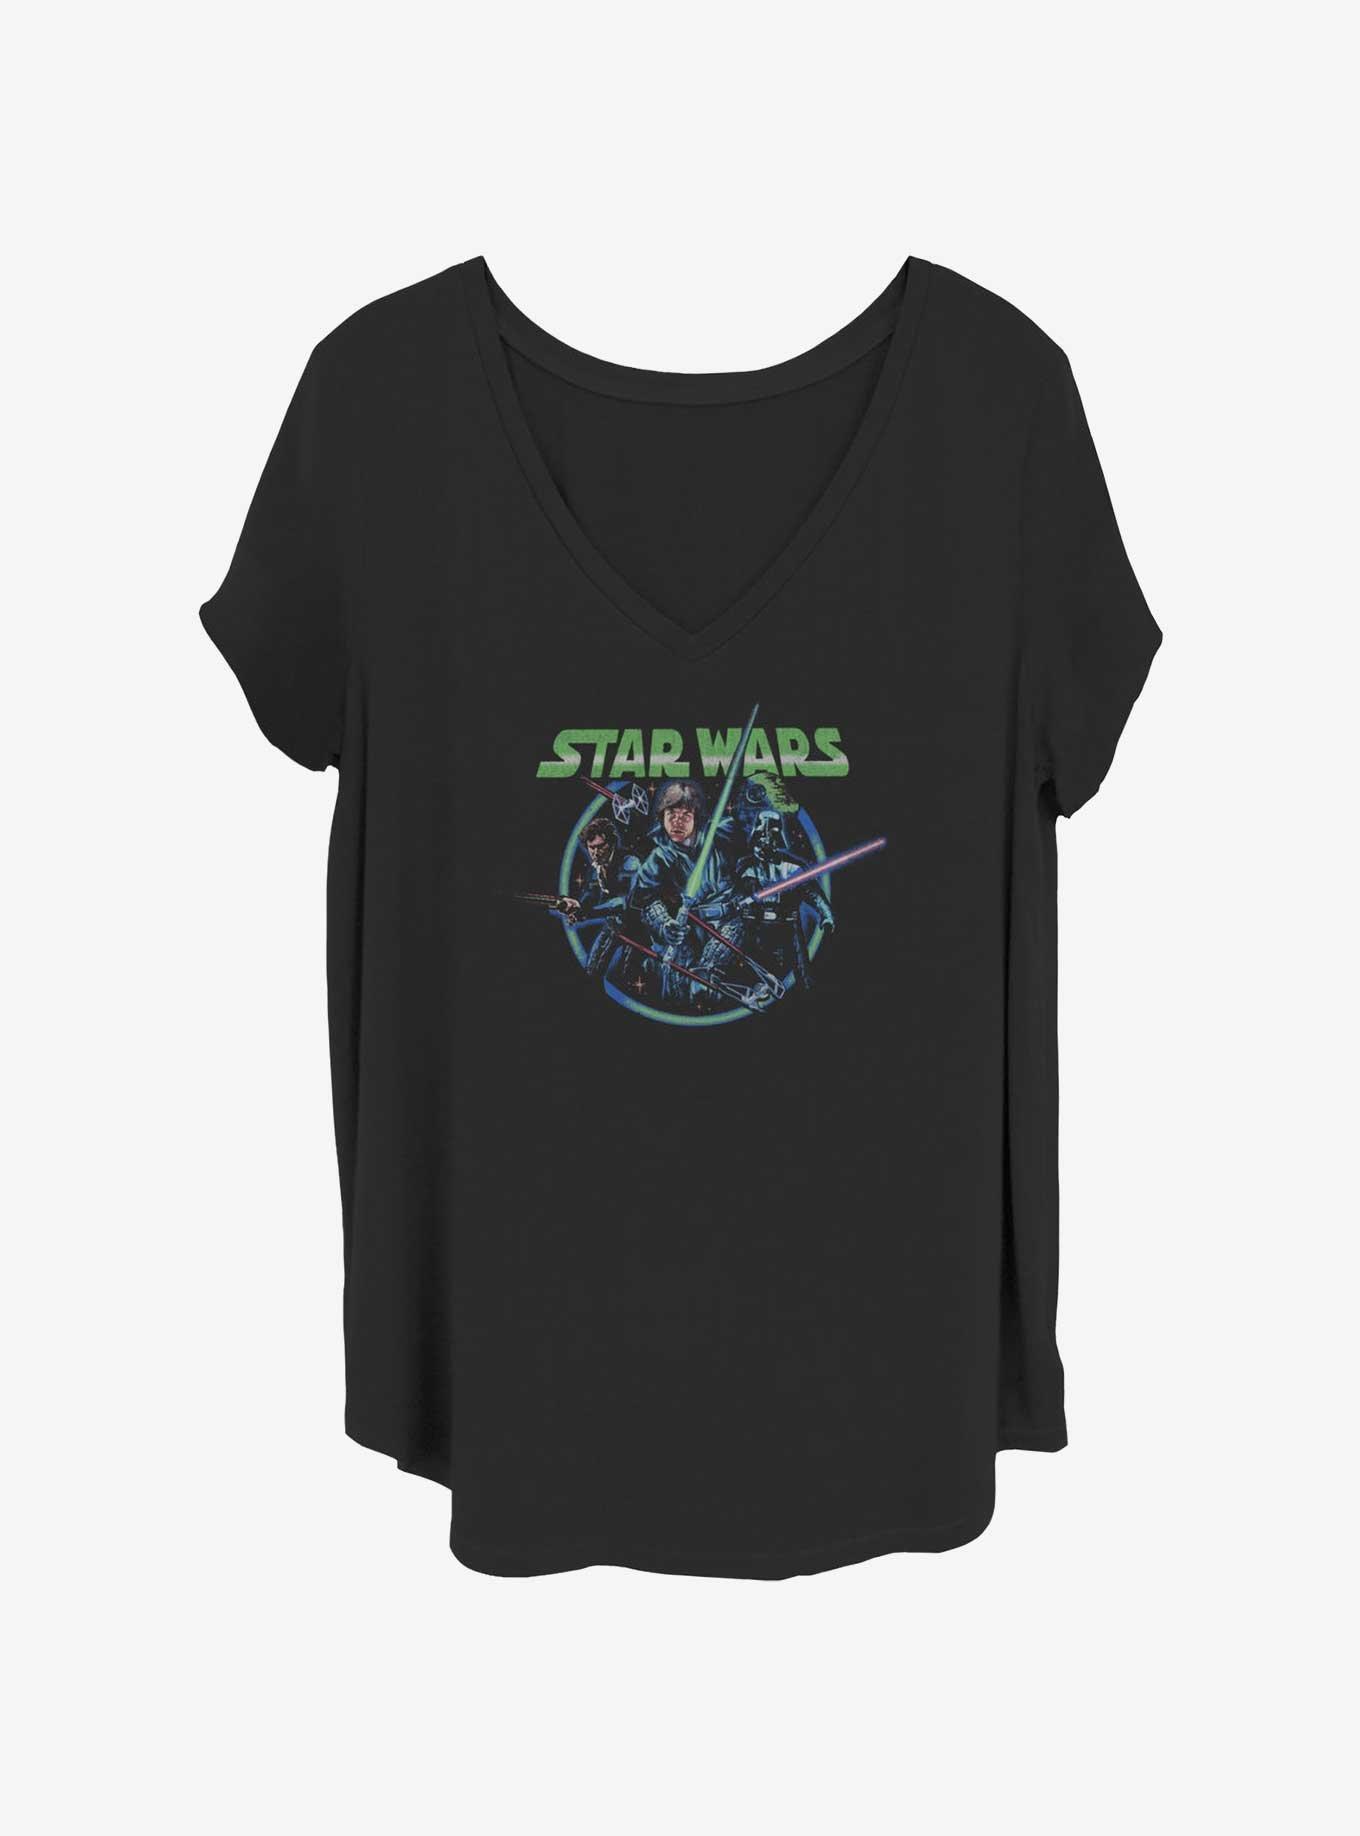 Star Wars Retro Group Girls T-Shirt Plus